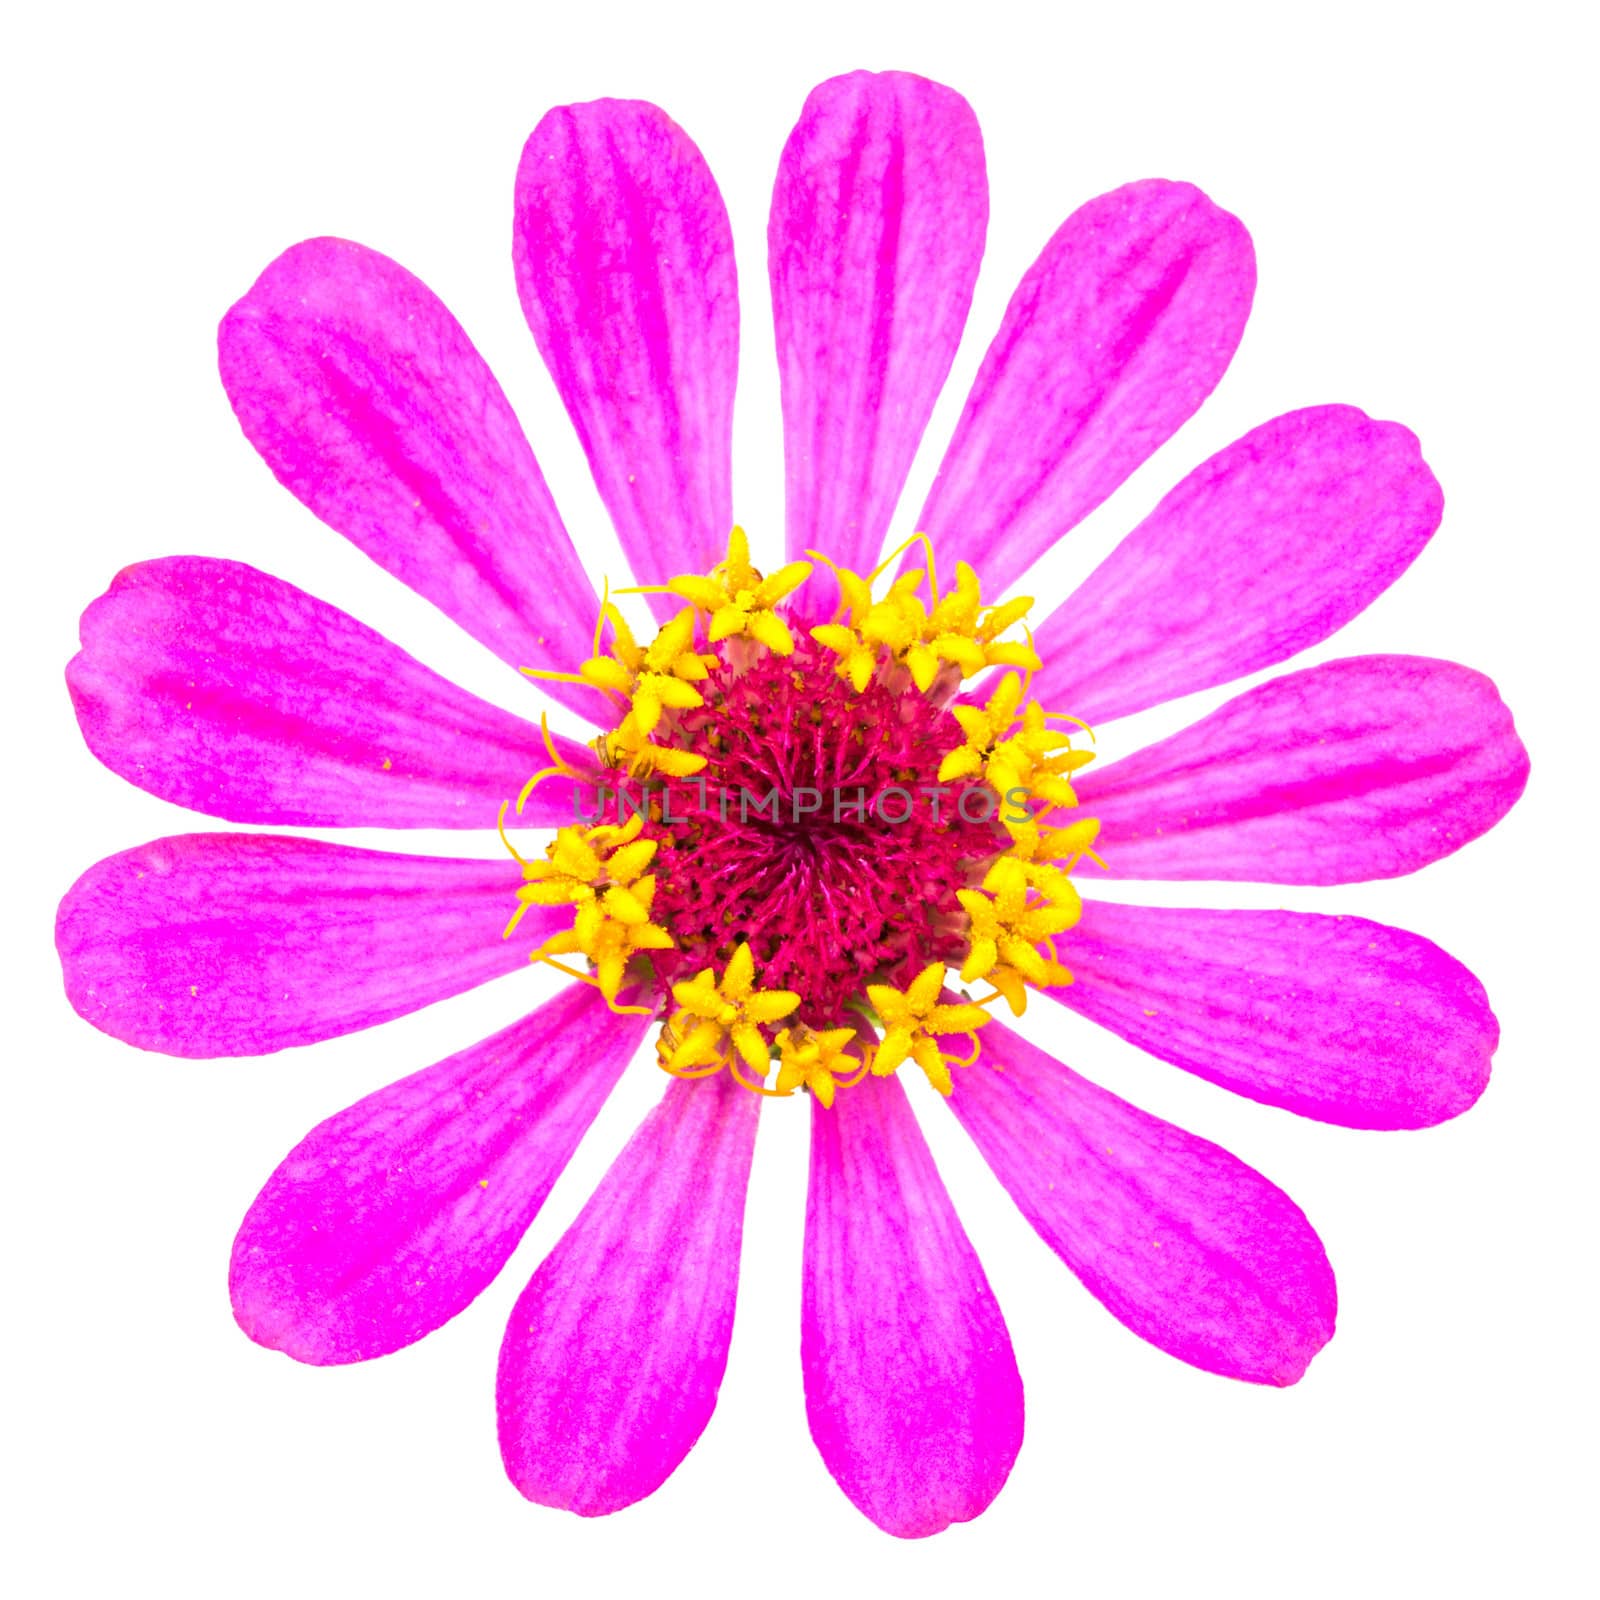 beautiful flower - chrysanthemum by supersaiyan